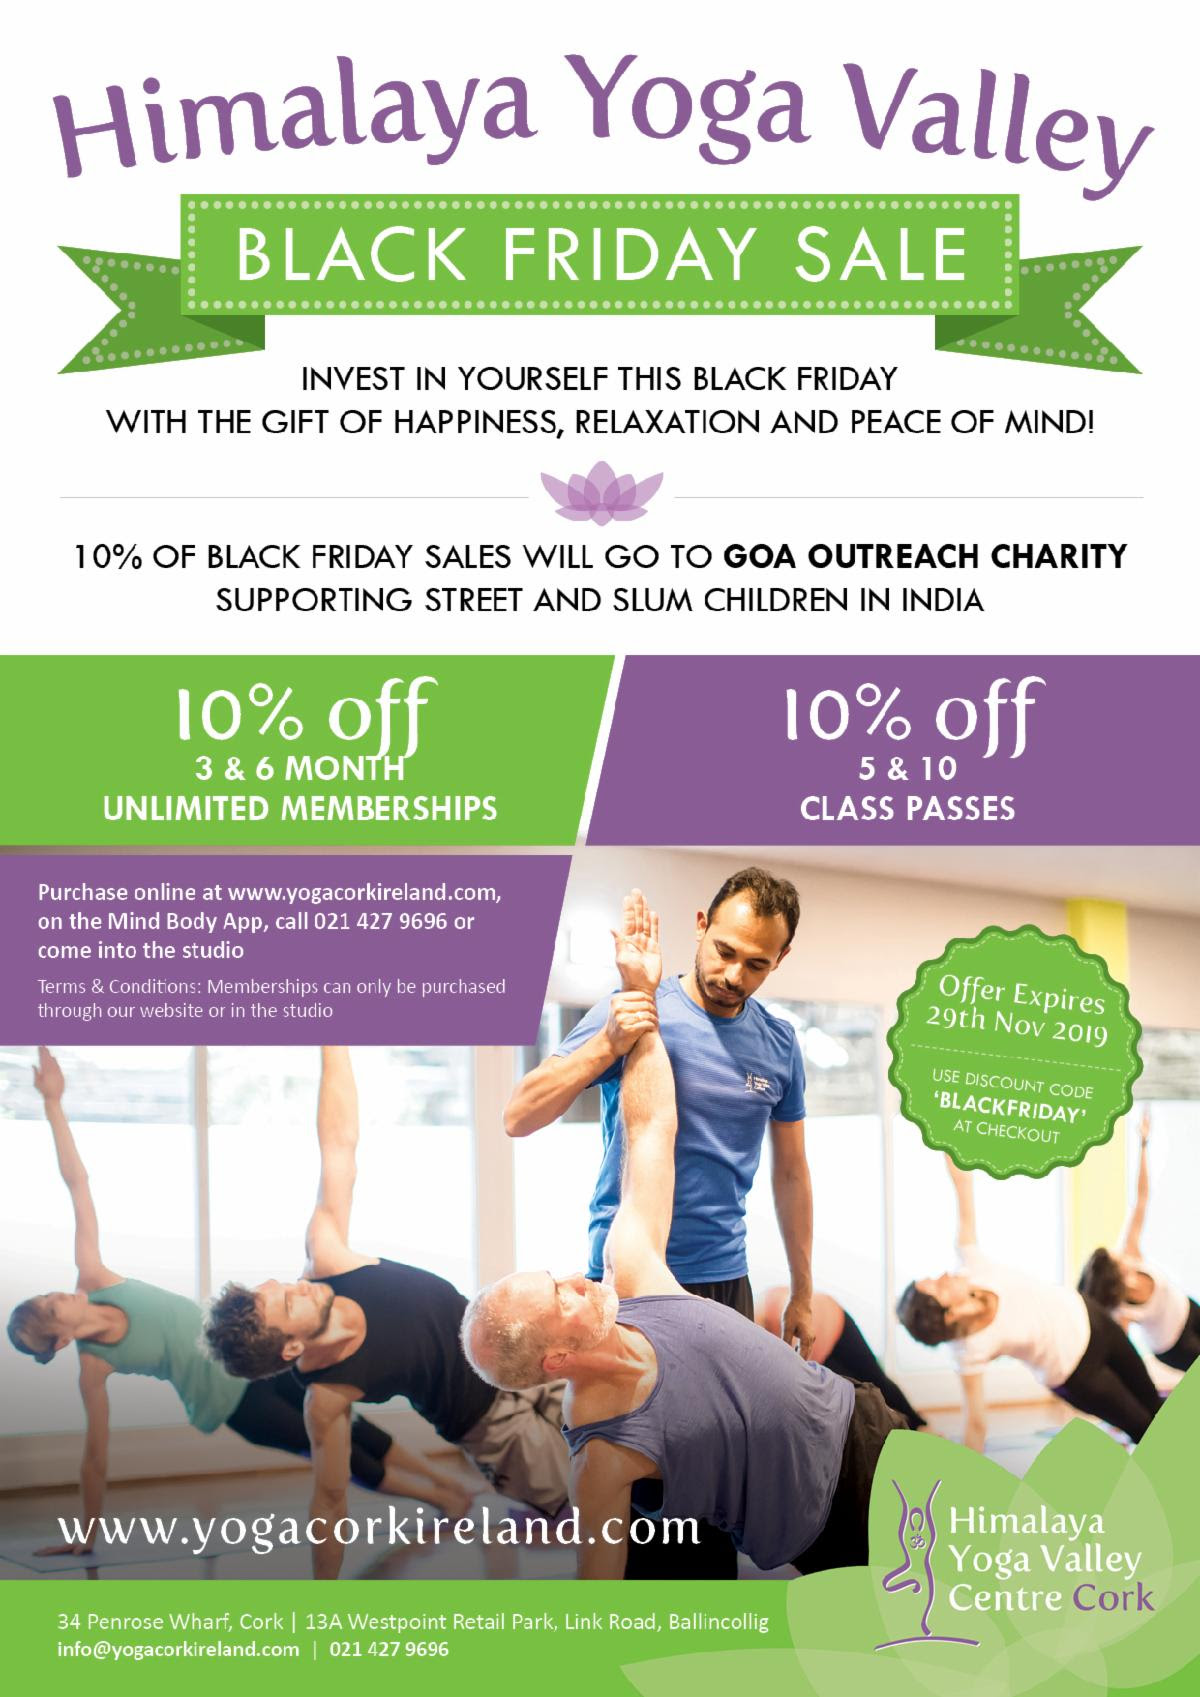 Light Up Black Friday With Yoga! - Himalaya Yoga Valley Cork